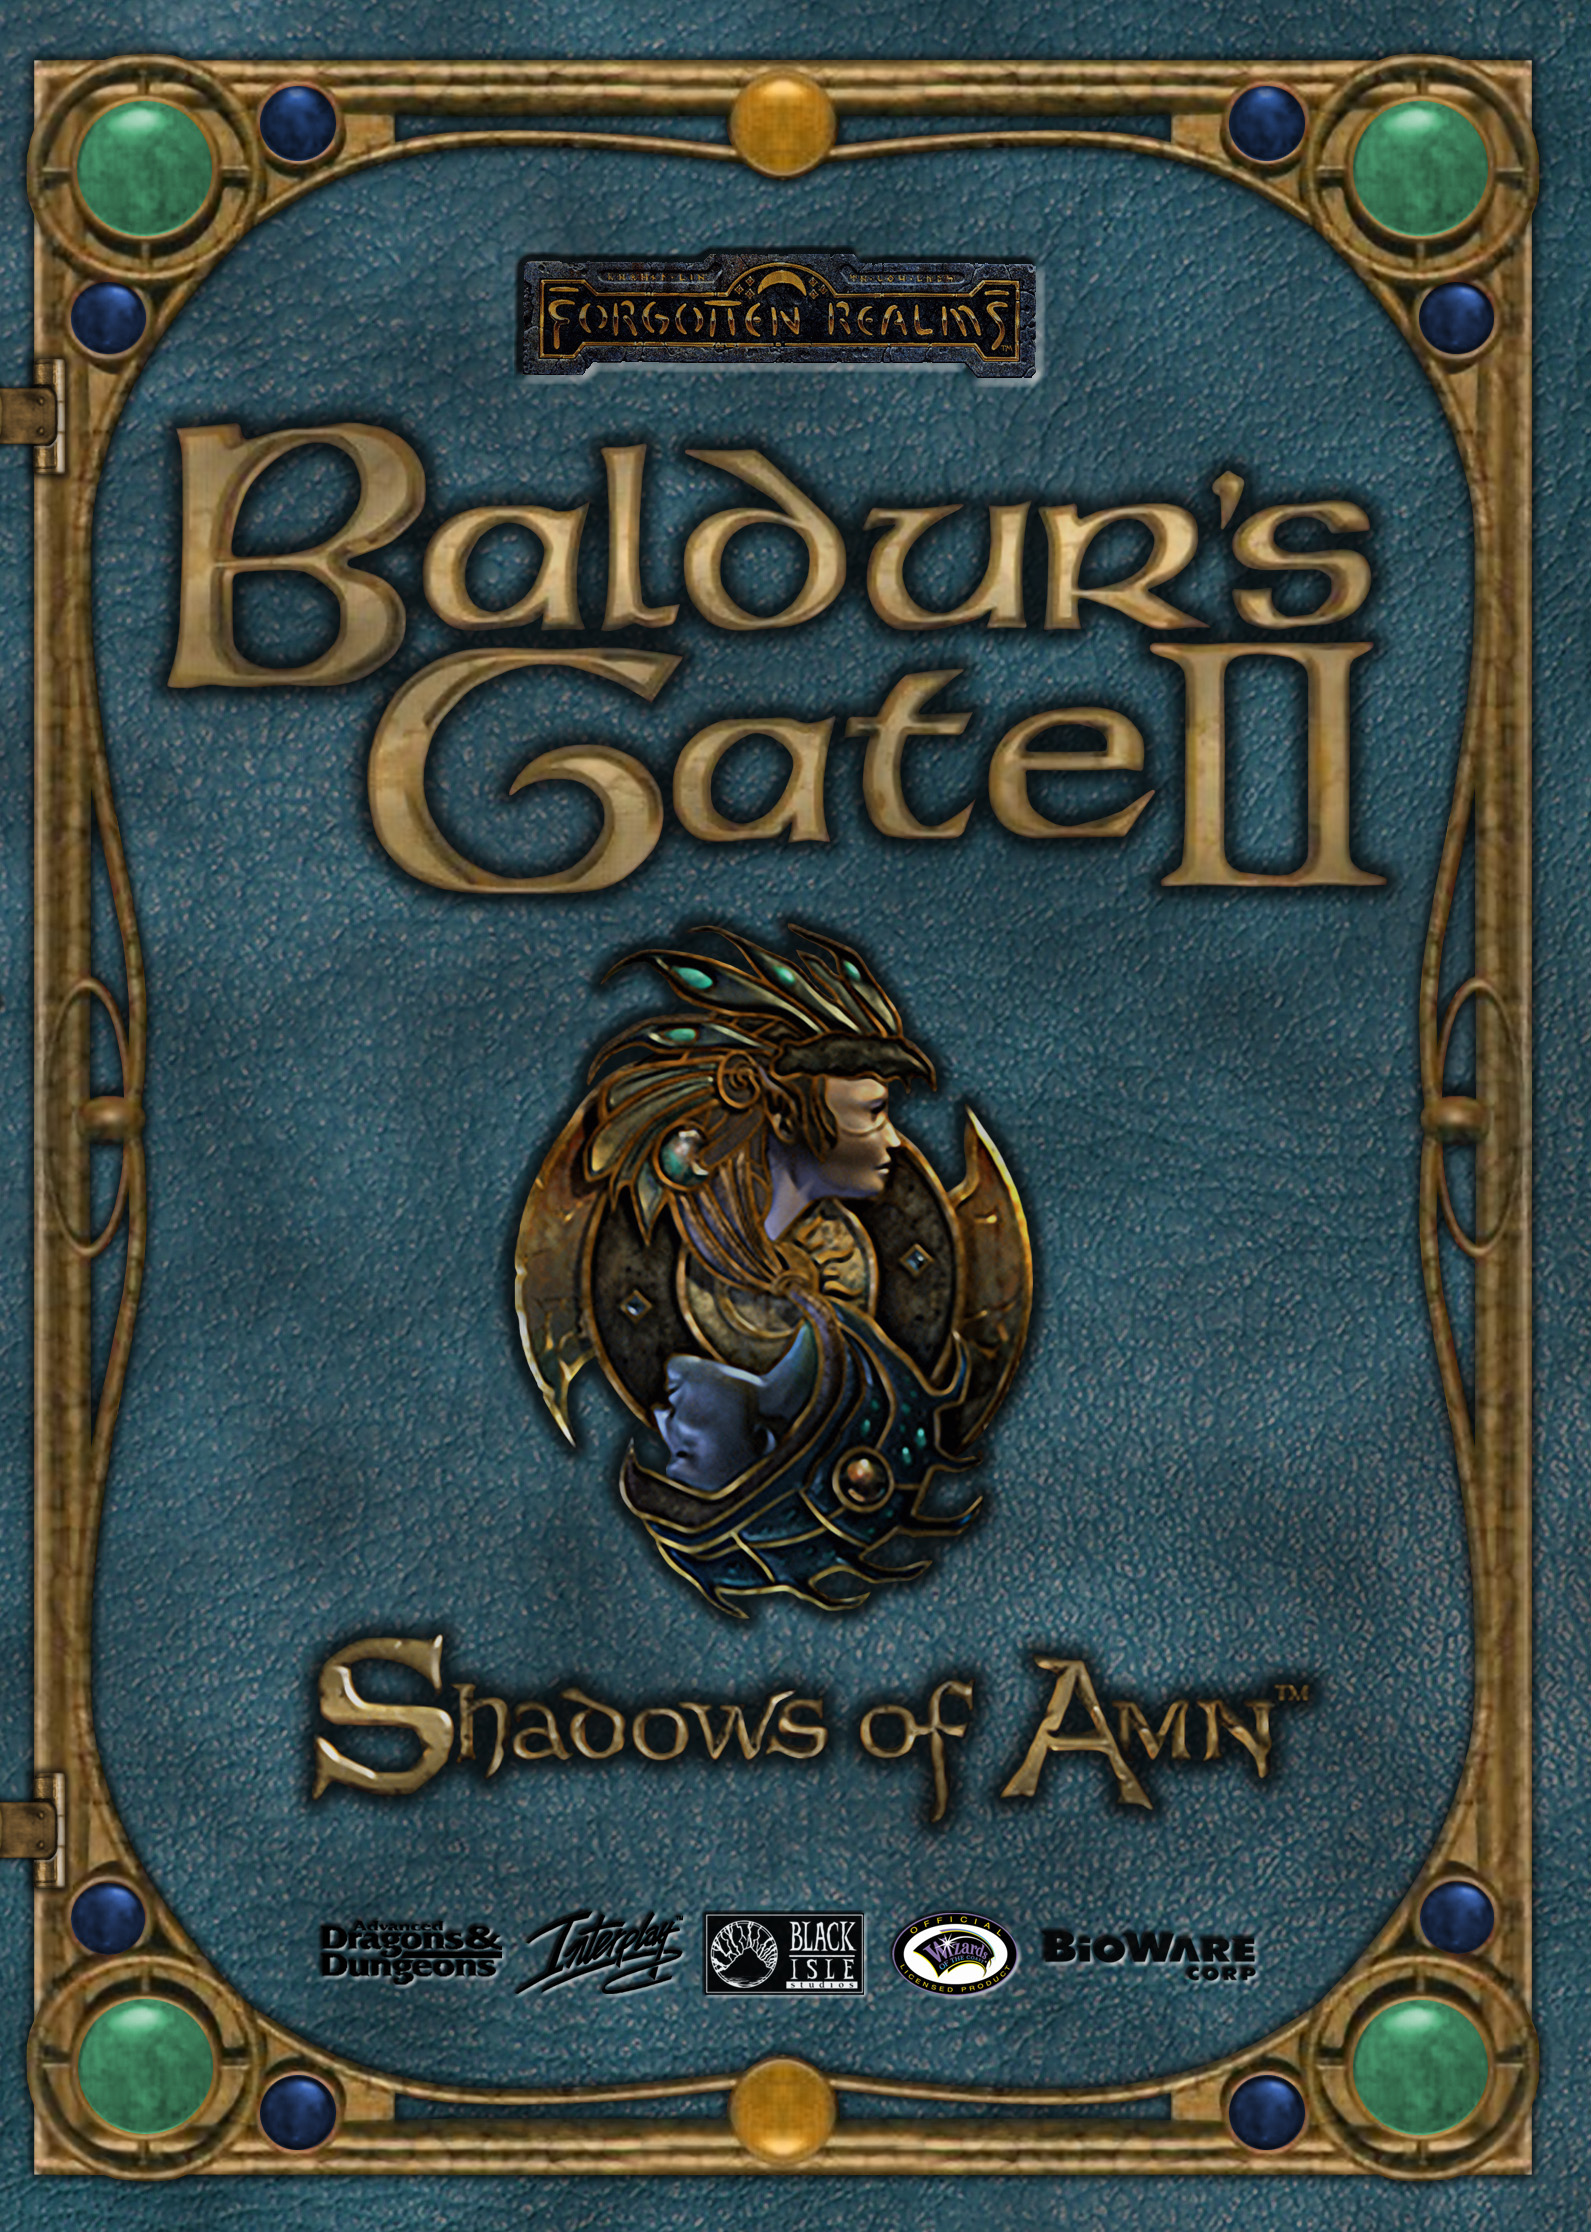 Baldur's Gate II: Shadows of Amn (game) | Forgotten Realms Wiki ...